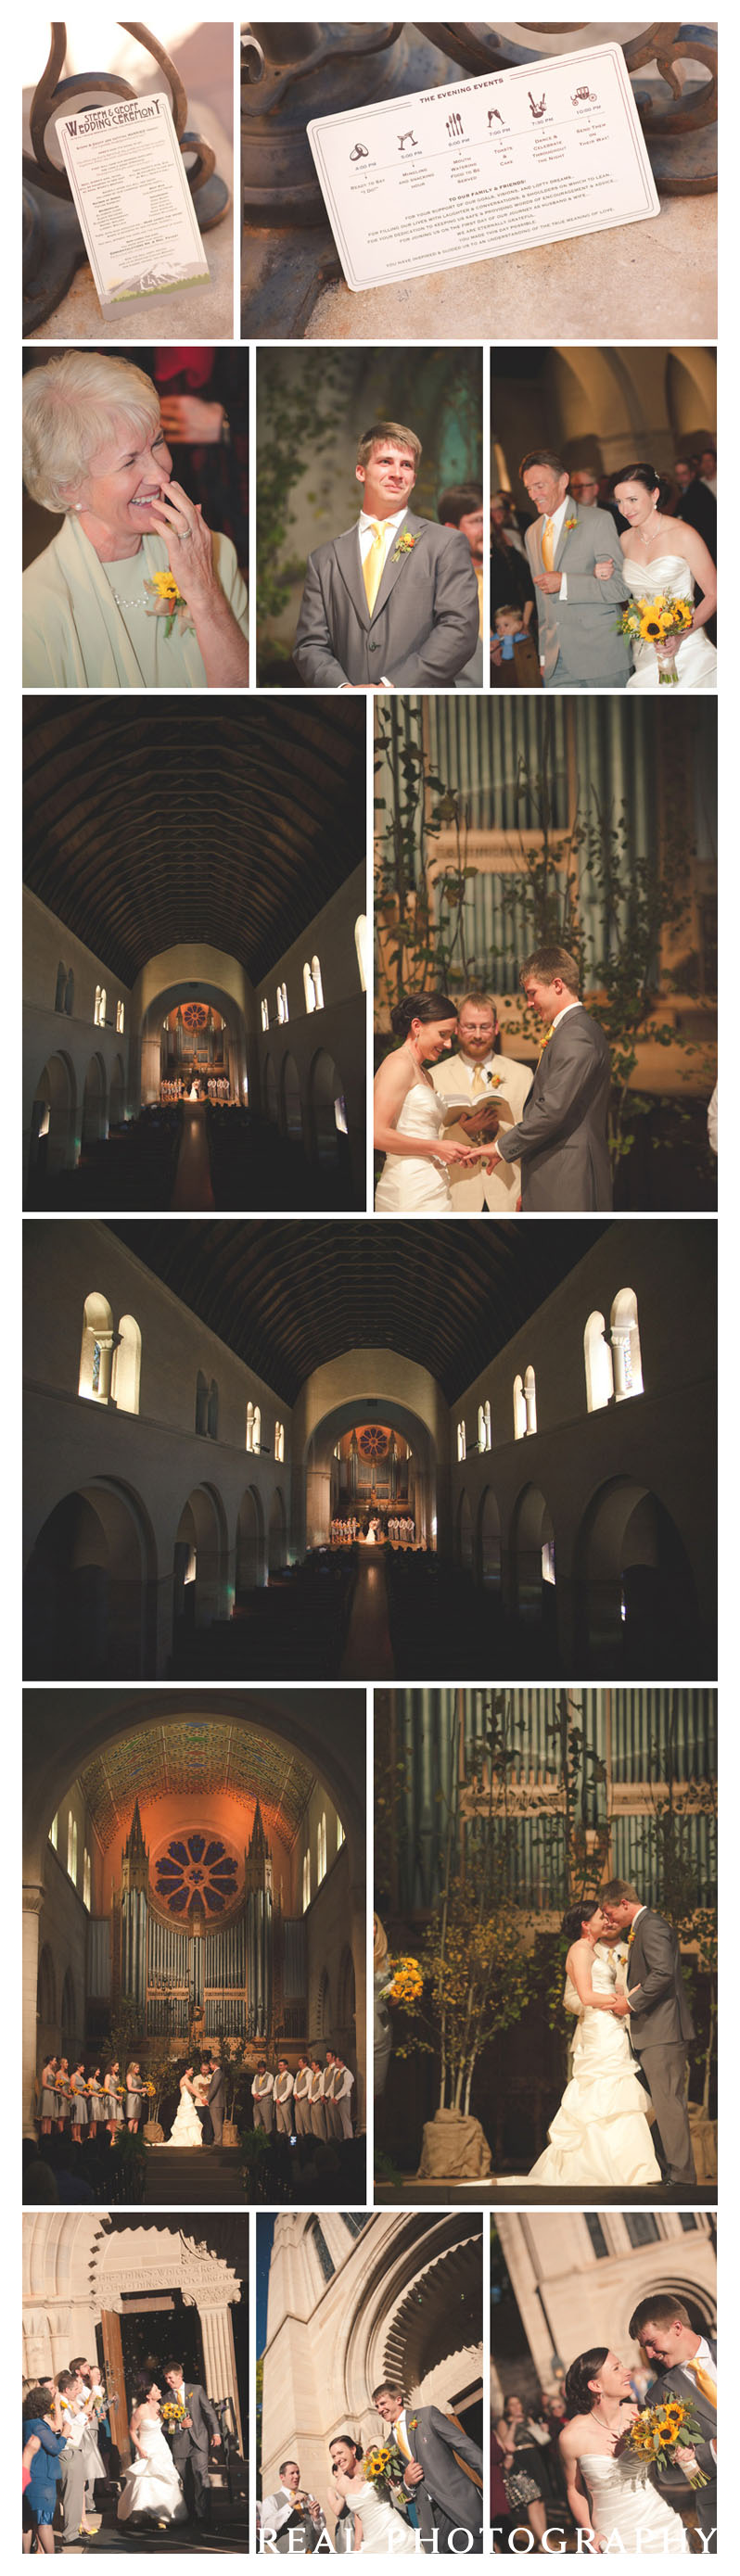 shove chapel wedding photographer 